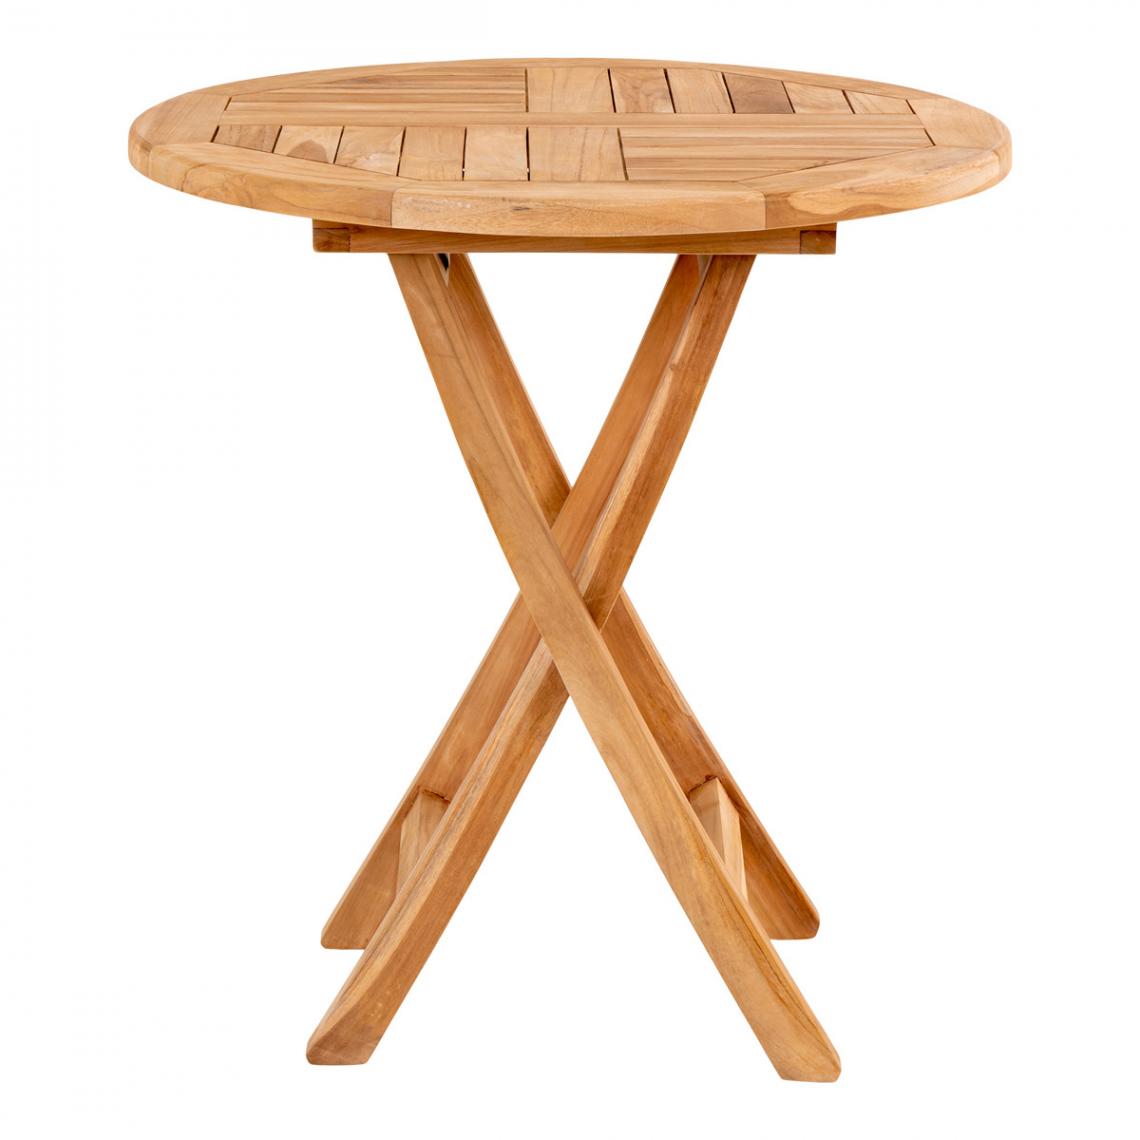 Visiodirect - Table de jardin coloris naturel en bois de teck - diamètre 70 x hauteur 75 cm - Tables de jardin